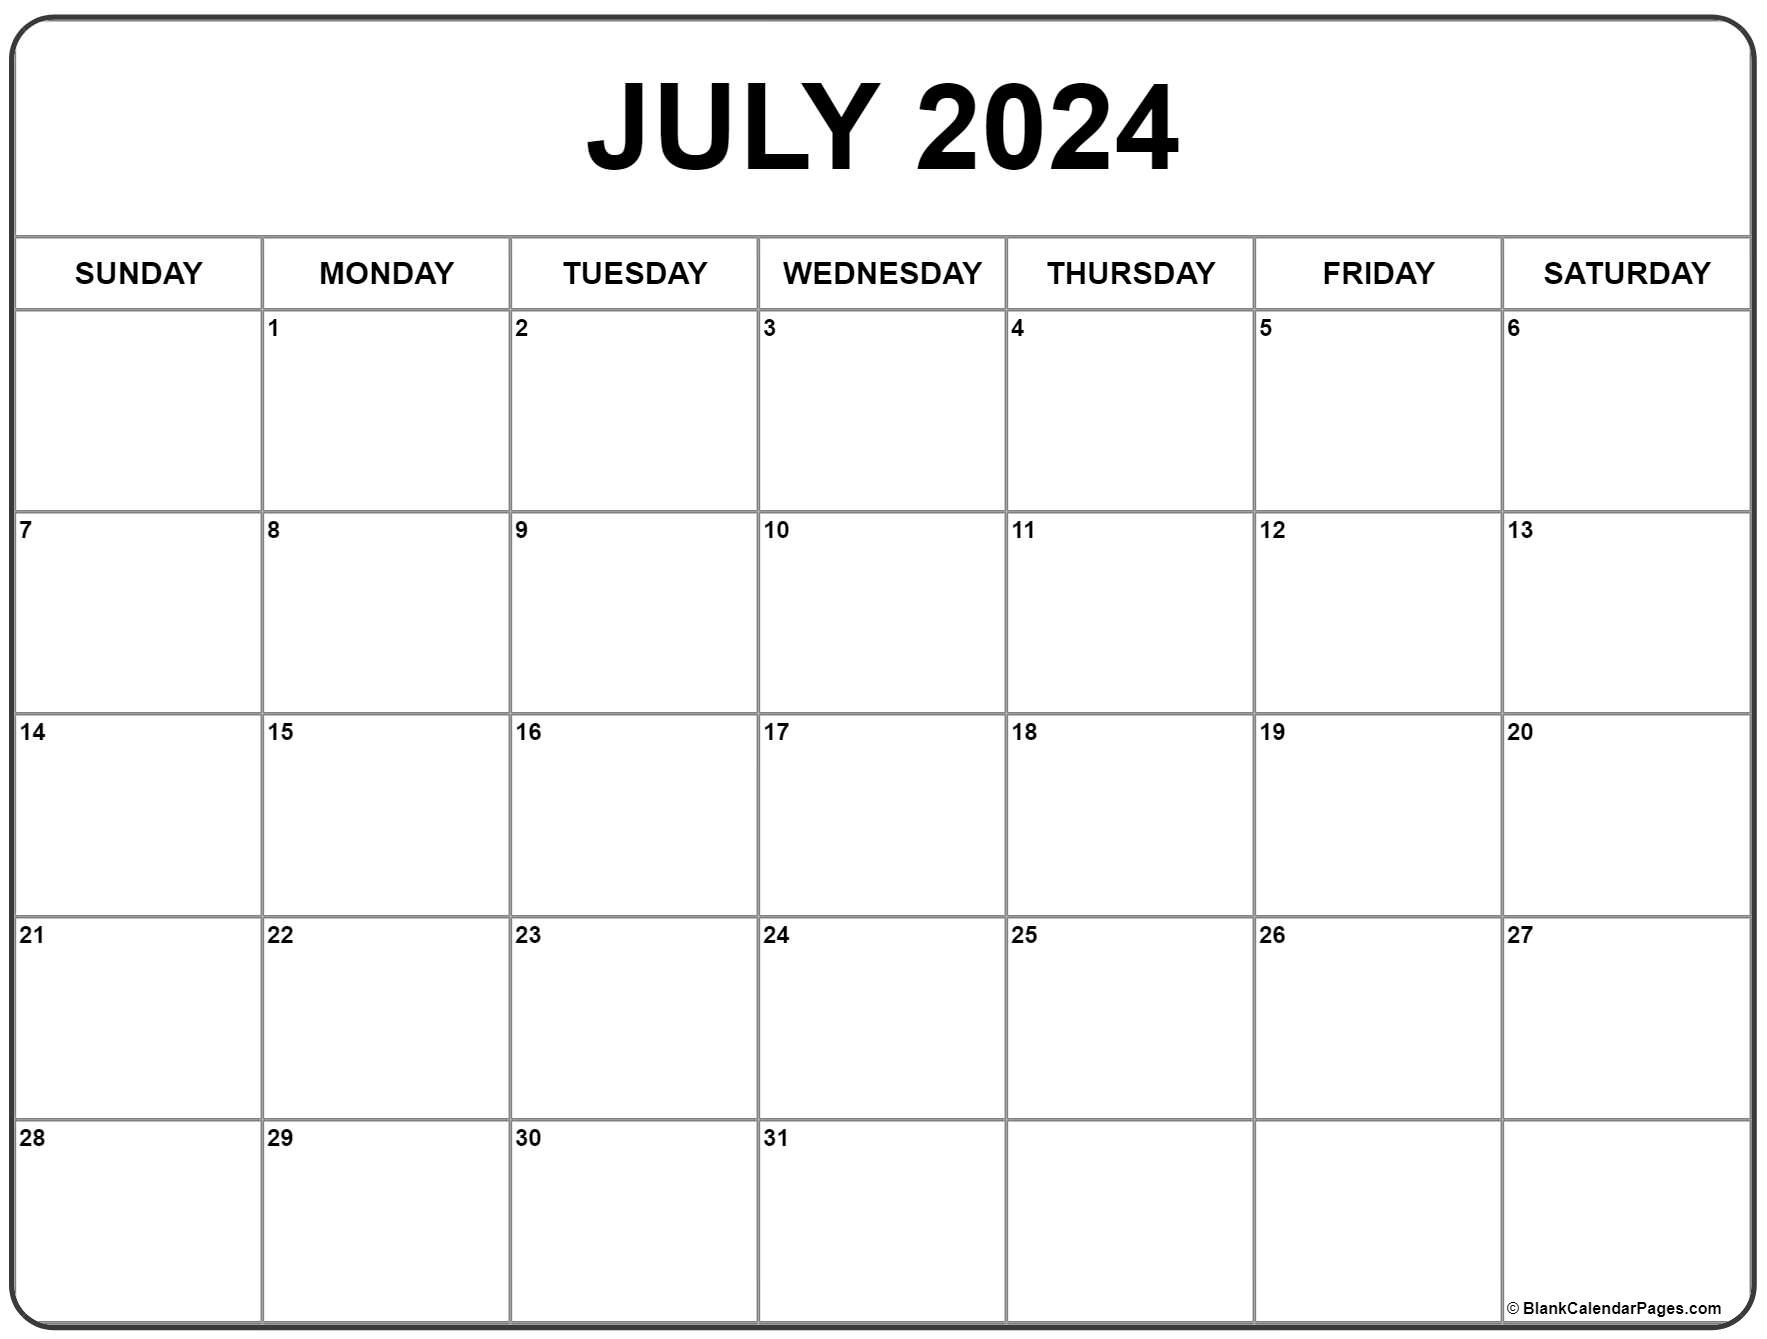 July 2024 Calendar | Free Printable Calendar for Free Printable July 2024 Calendar